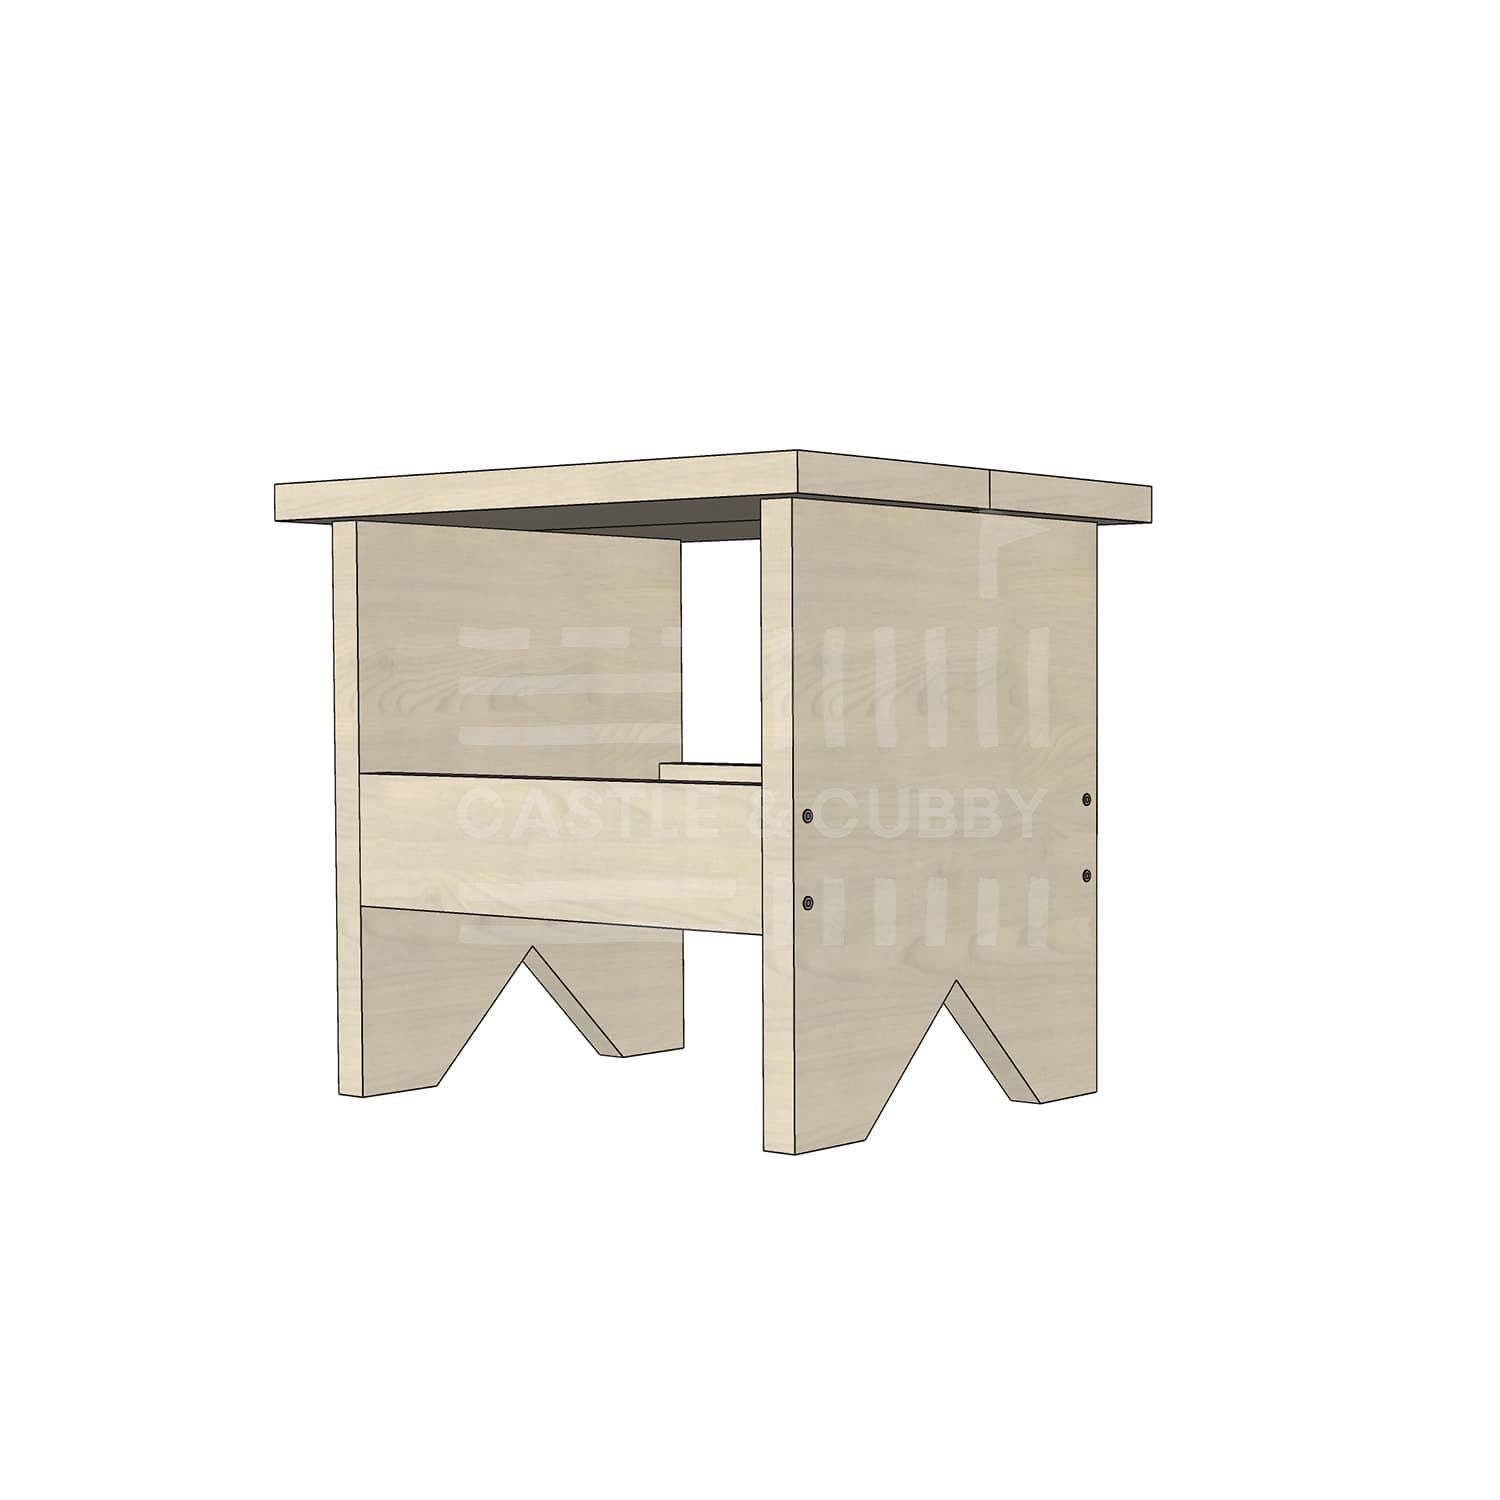 Timber standard size carpenter stool